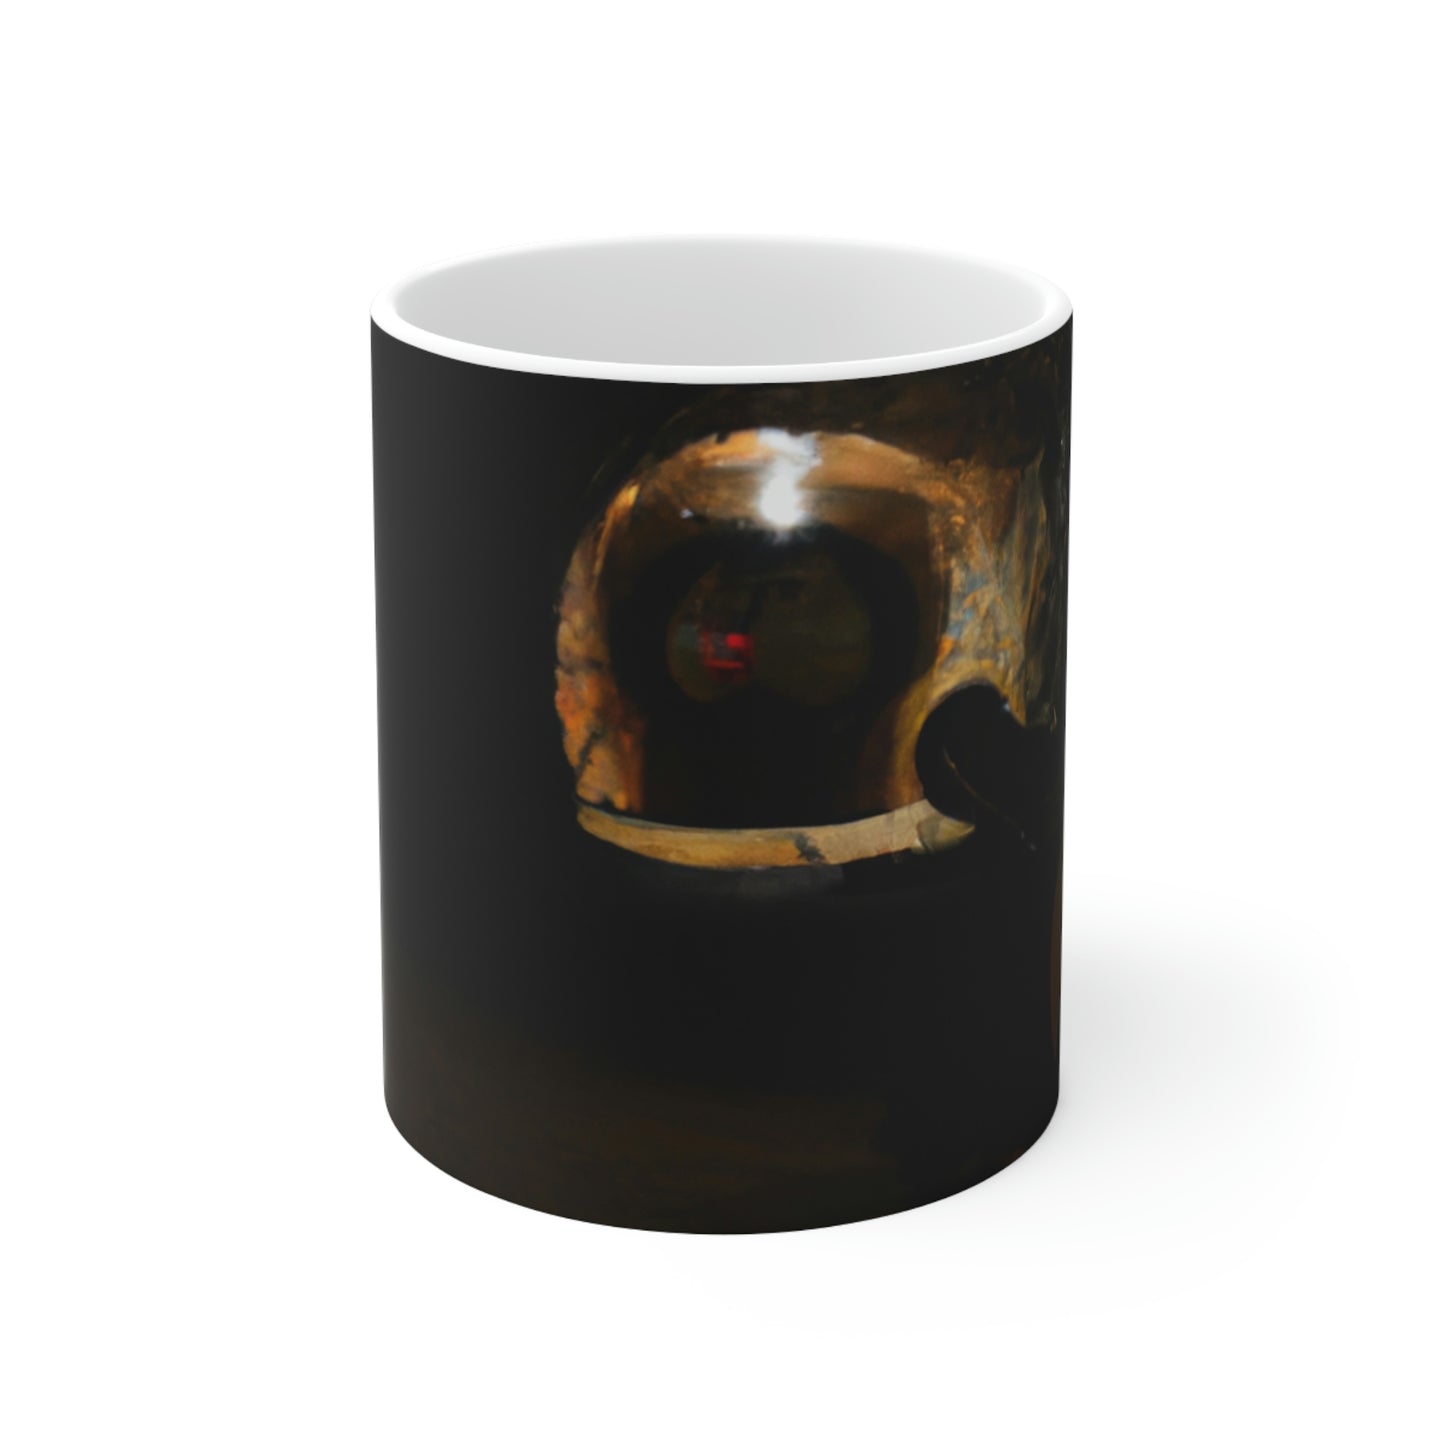 The Mysterious Subterranean Realm - The Alien Ceramic Mug 11 oz